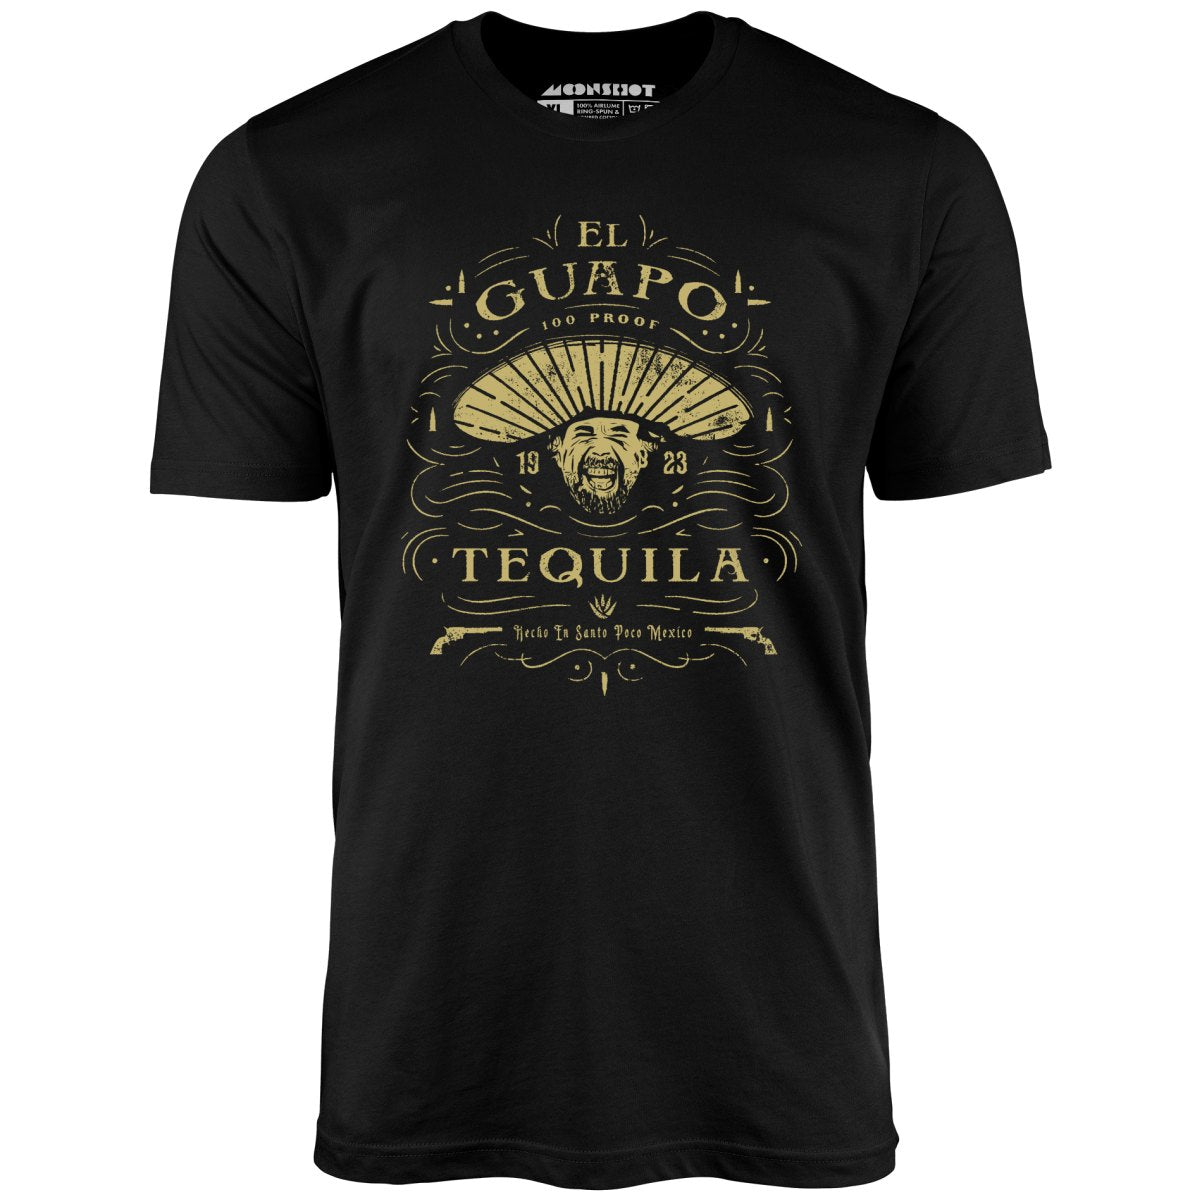 El Guapo Tequila - Unisex T-Shirt